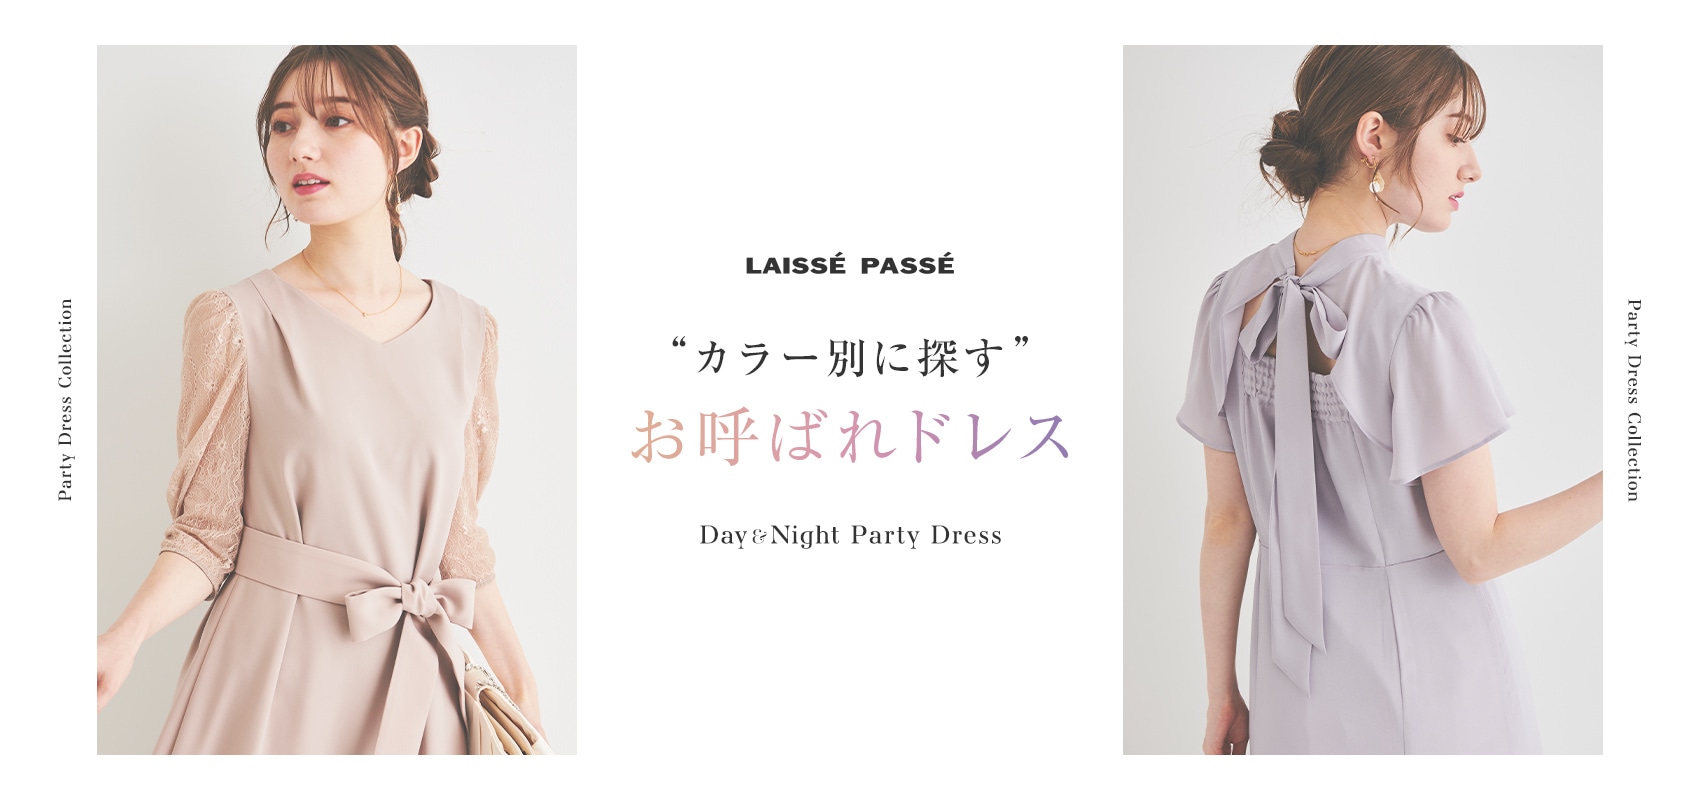 LAISSE PASSE -Day&Night Party Dress- カラー別に探す お呼ばれドレス